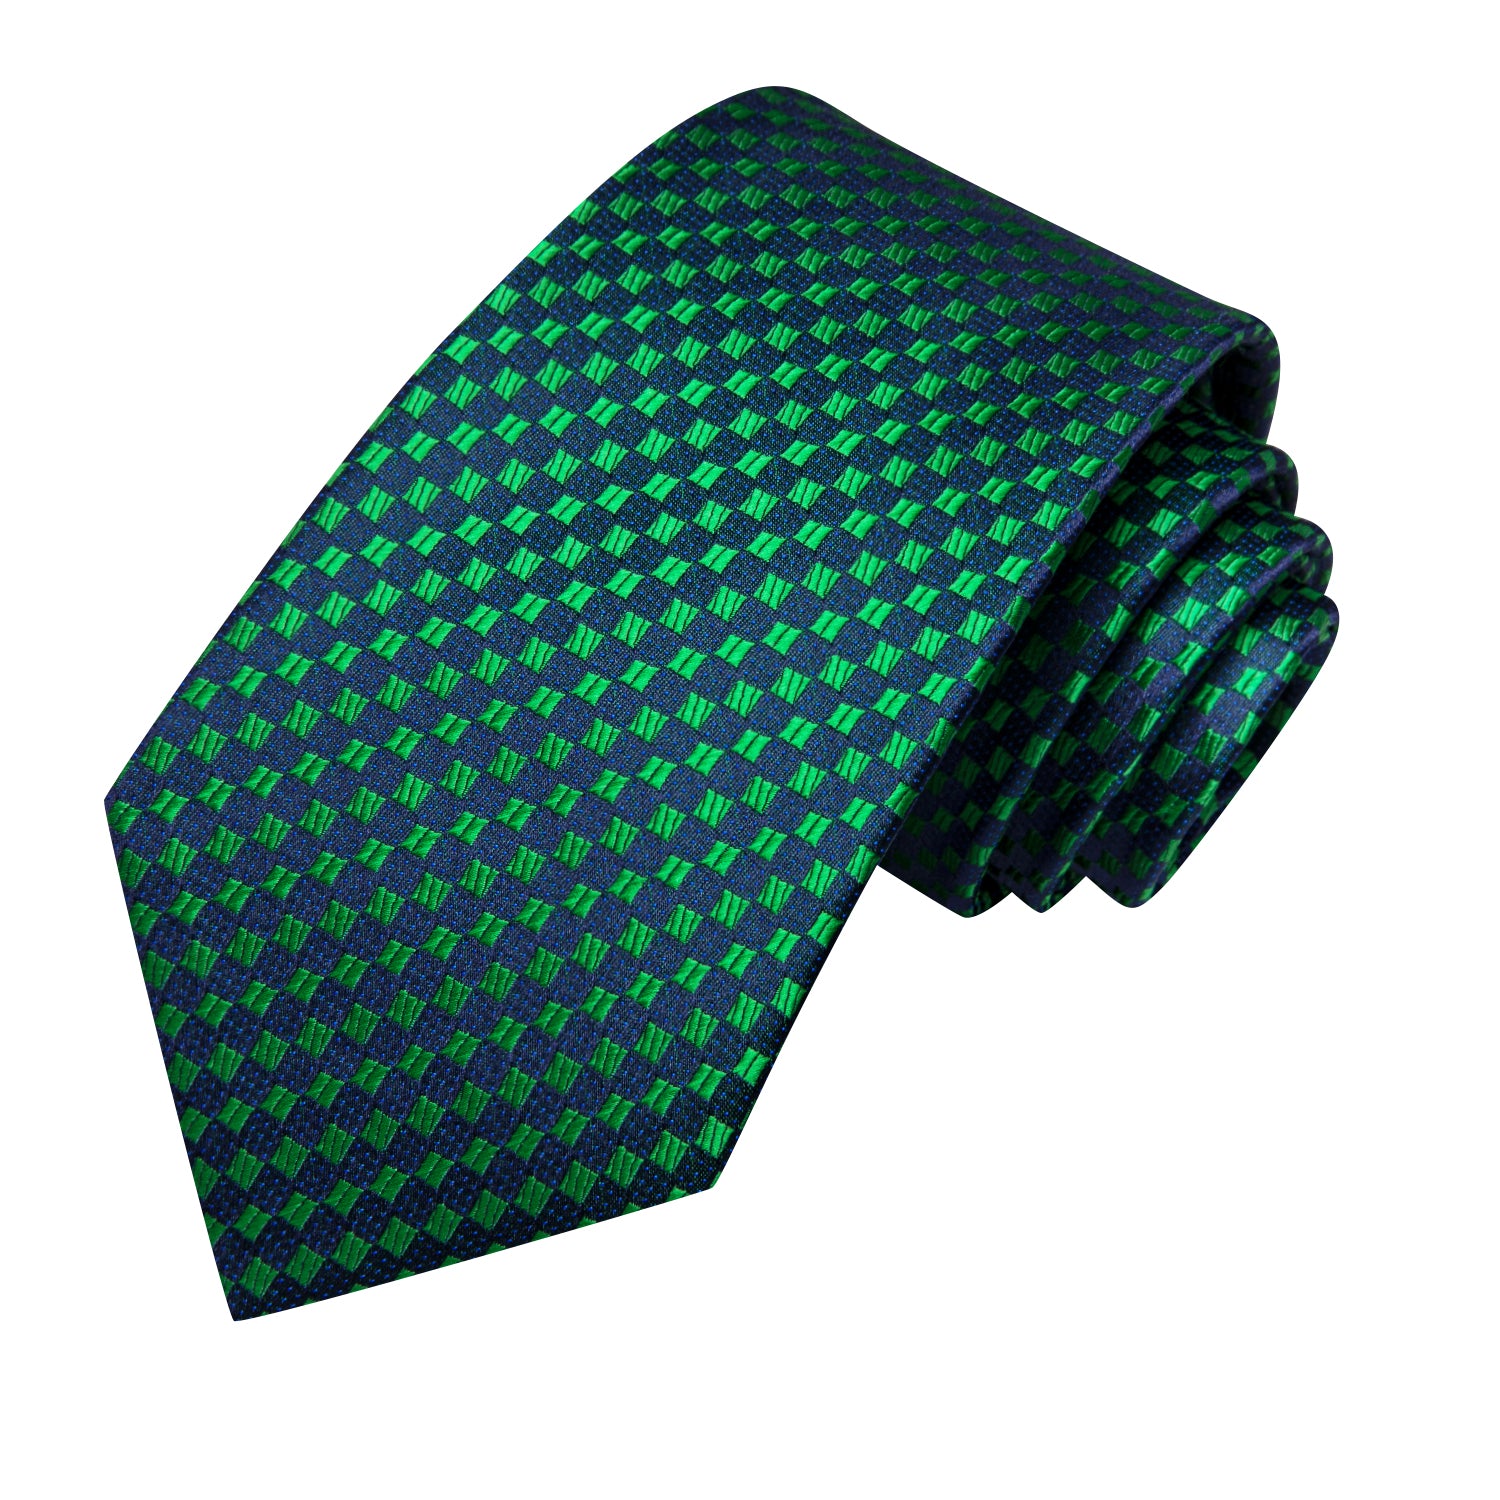 Hi-Tie Green Blue Plaid Men's Tie Pocket Square Cufflinks Set